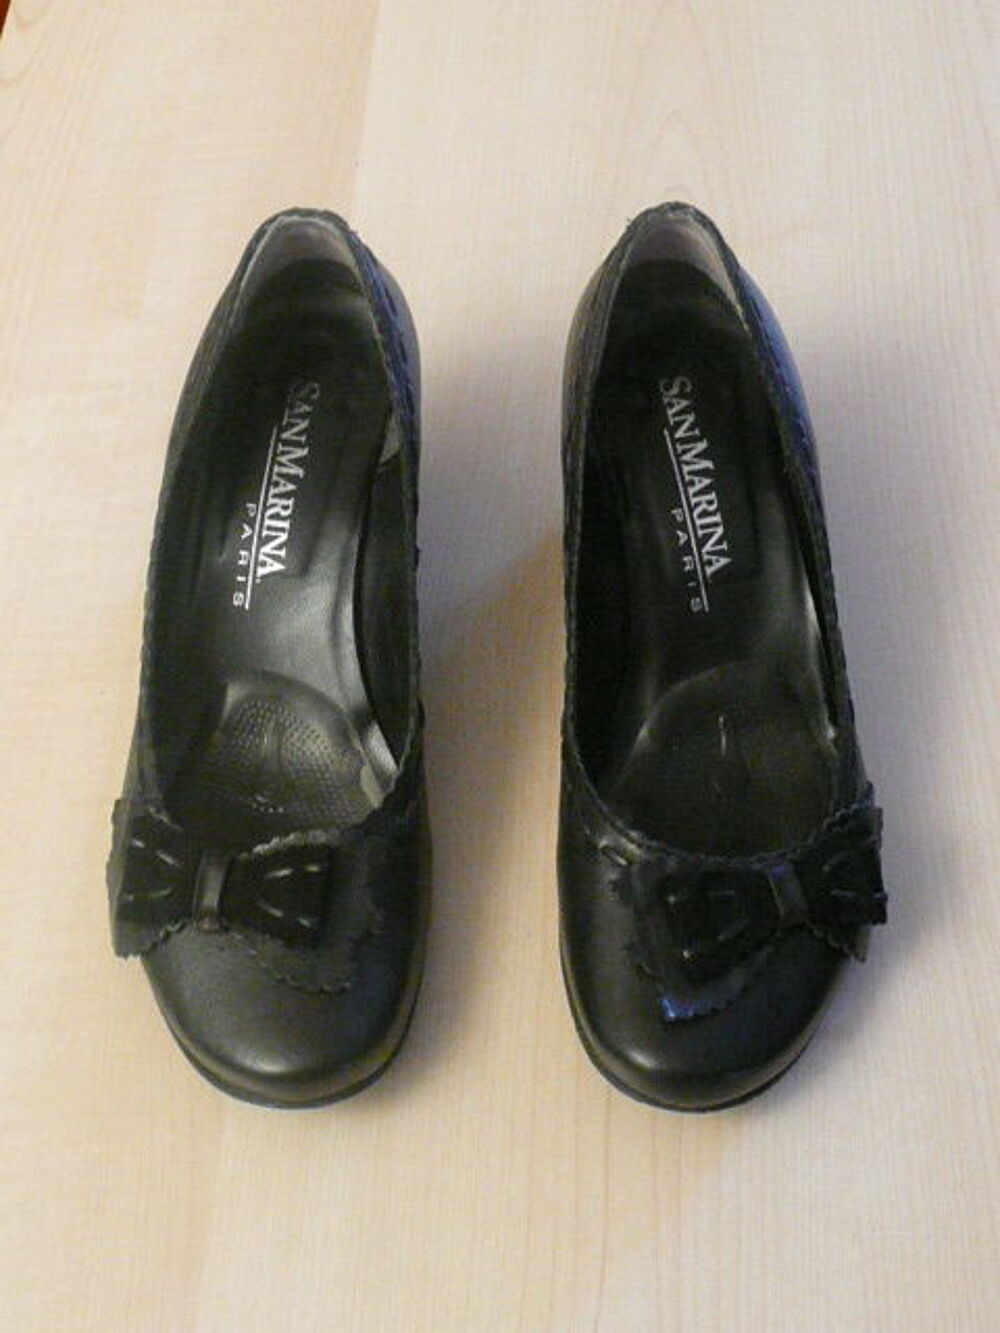 ESCARPINS SAN MARINA NOIR P36 Chaussures